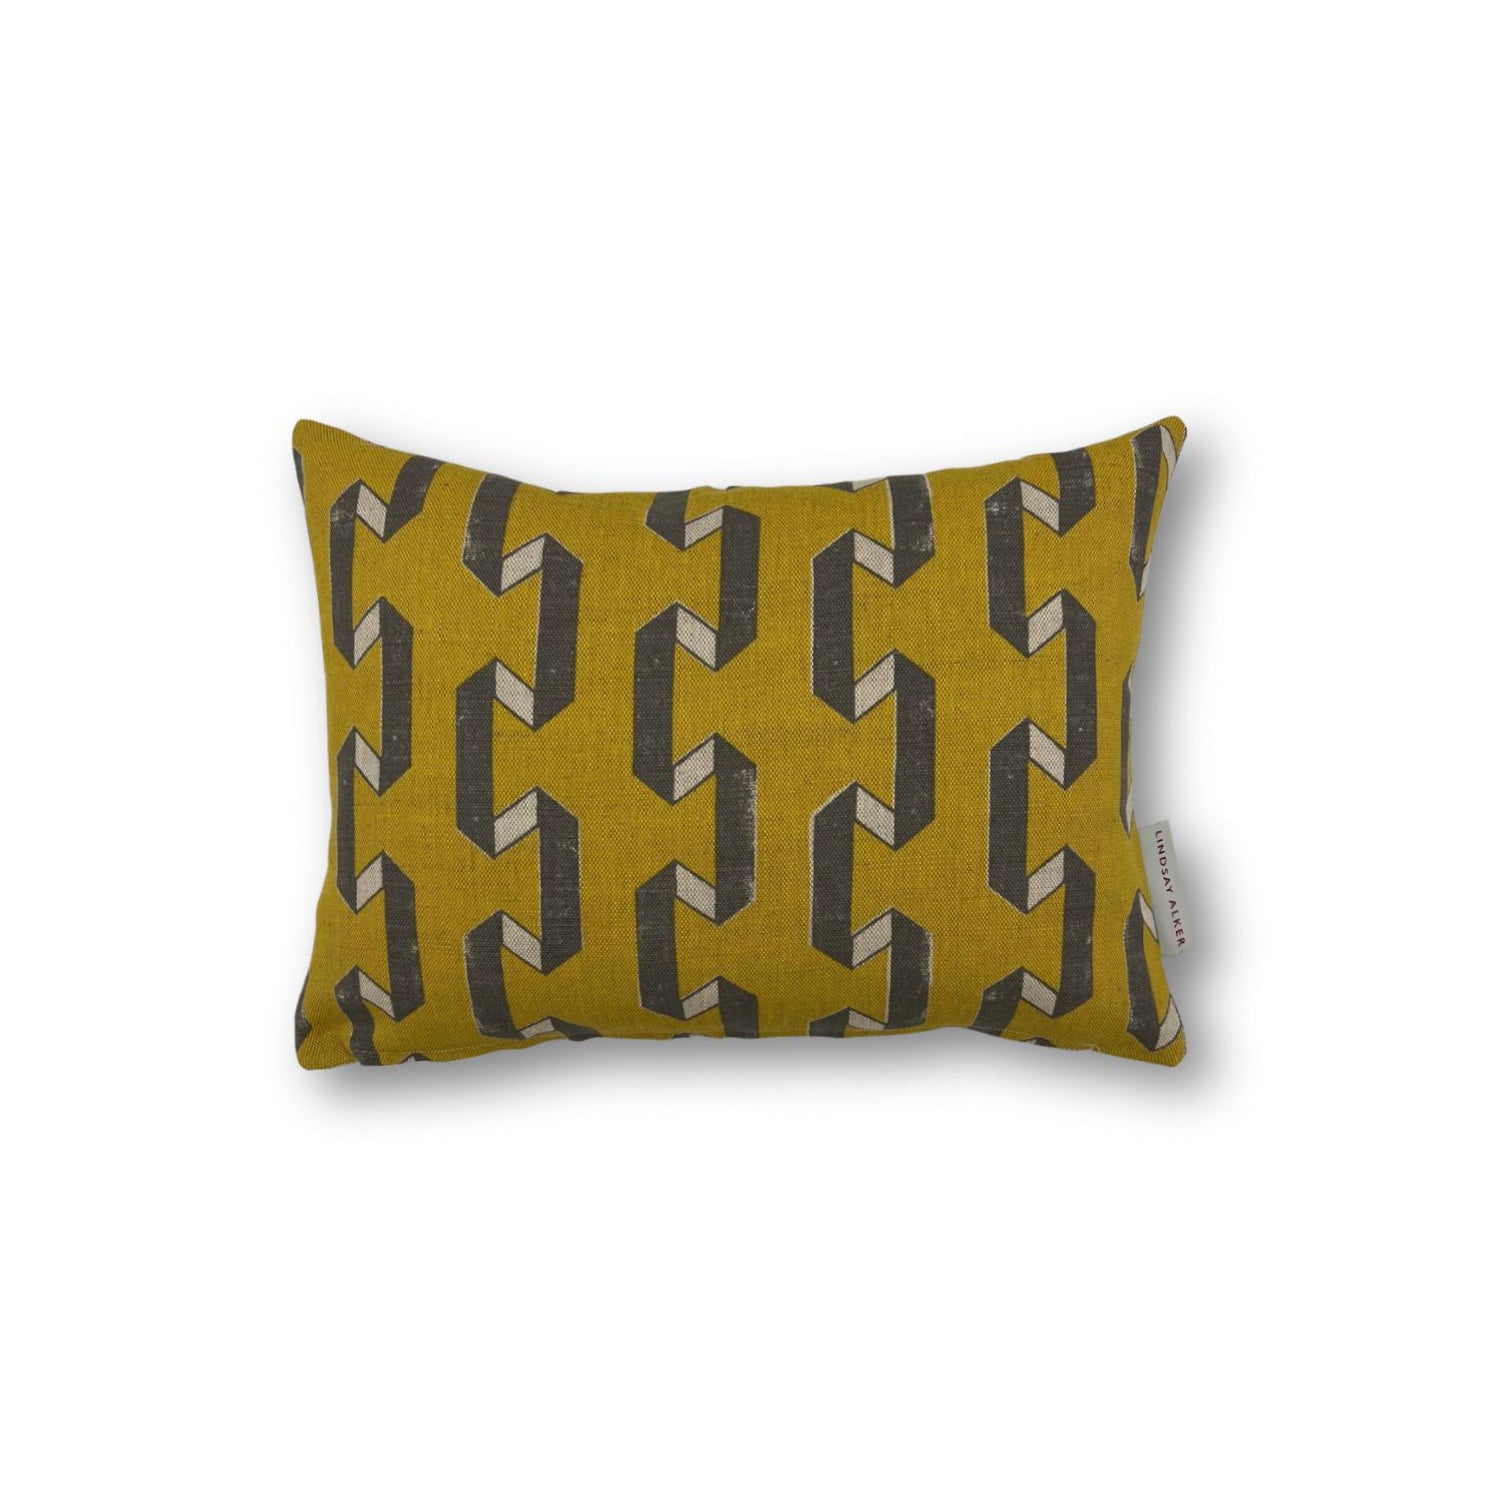 Rectangular throw pillow in mustard yellow, with a grey 'folded ribbon' stripe motif.